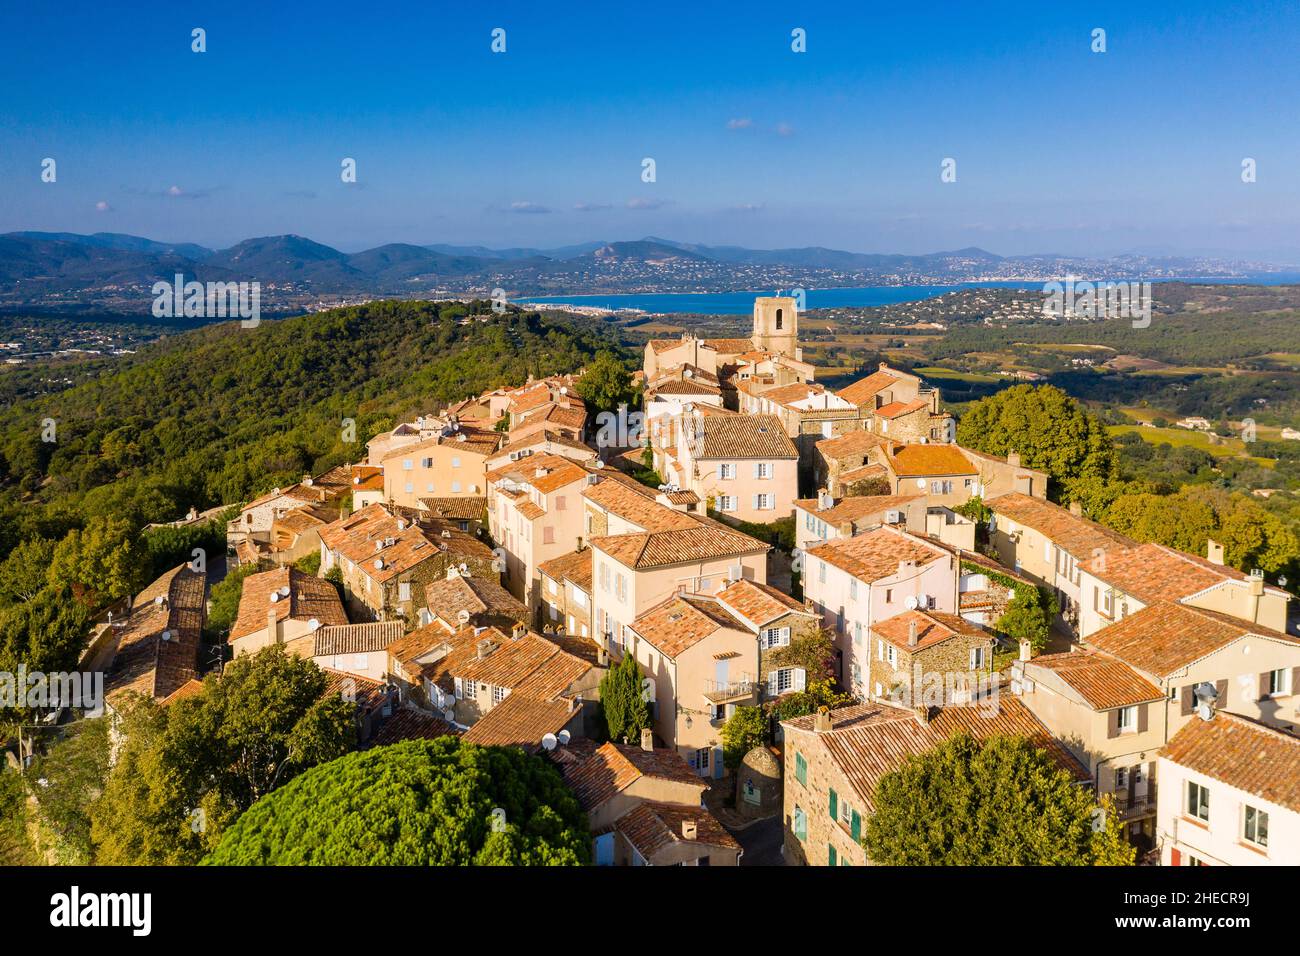 France, Var, Gulf of Saint Tropez, Gassin, labelled Les Plus Beaux Villages de France (The Most Beautiful Villages of France), general view of the vil Stock Photo